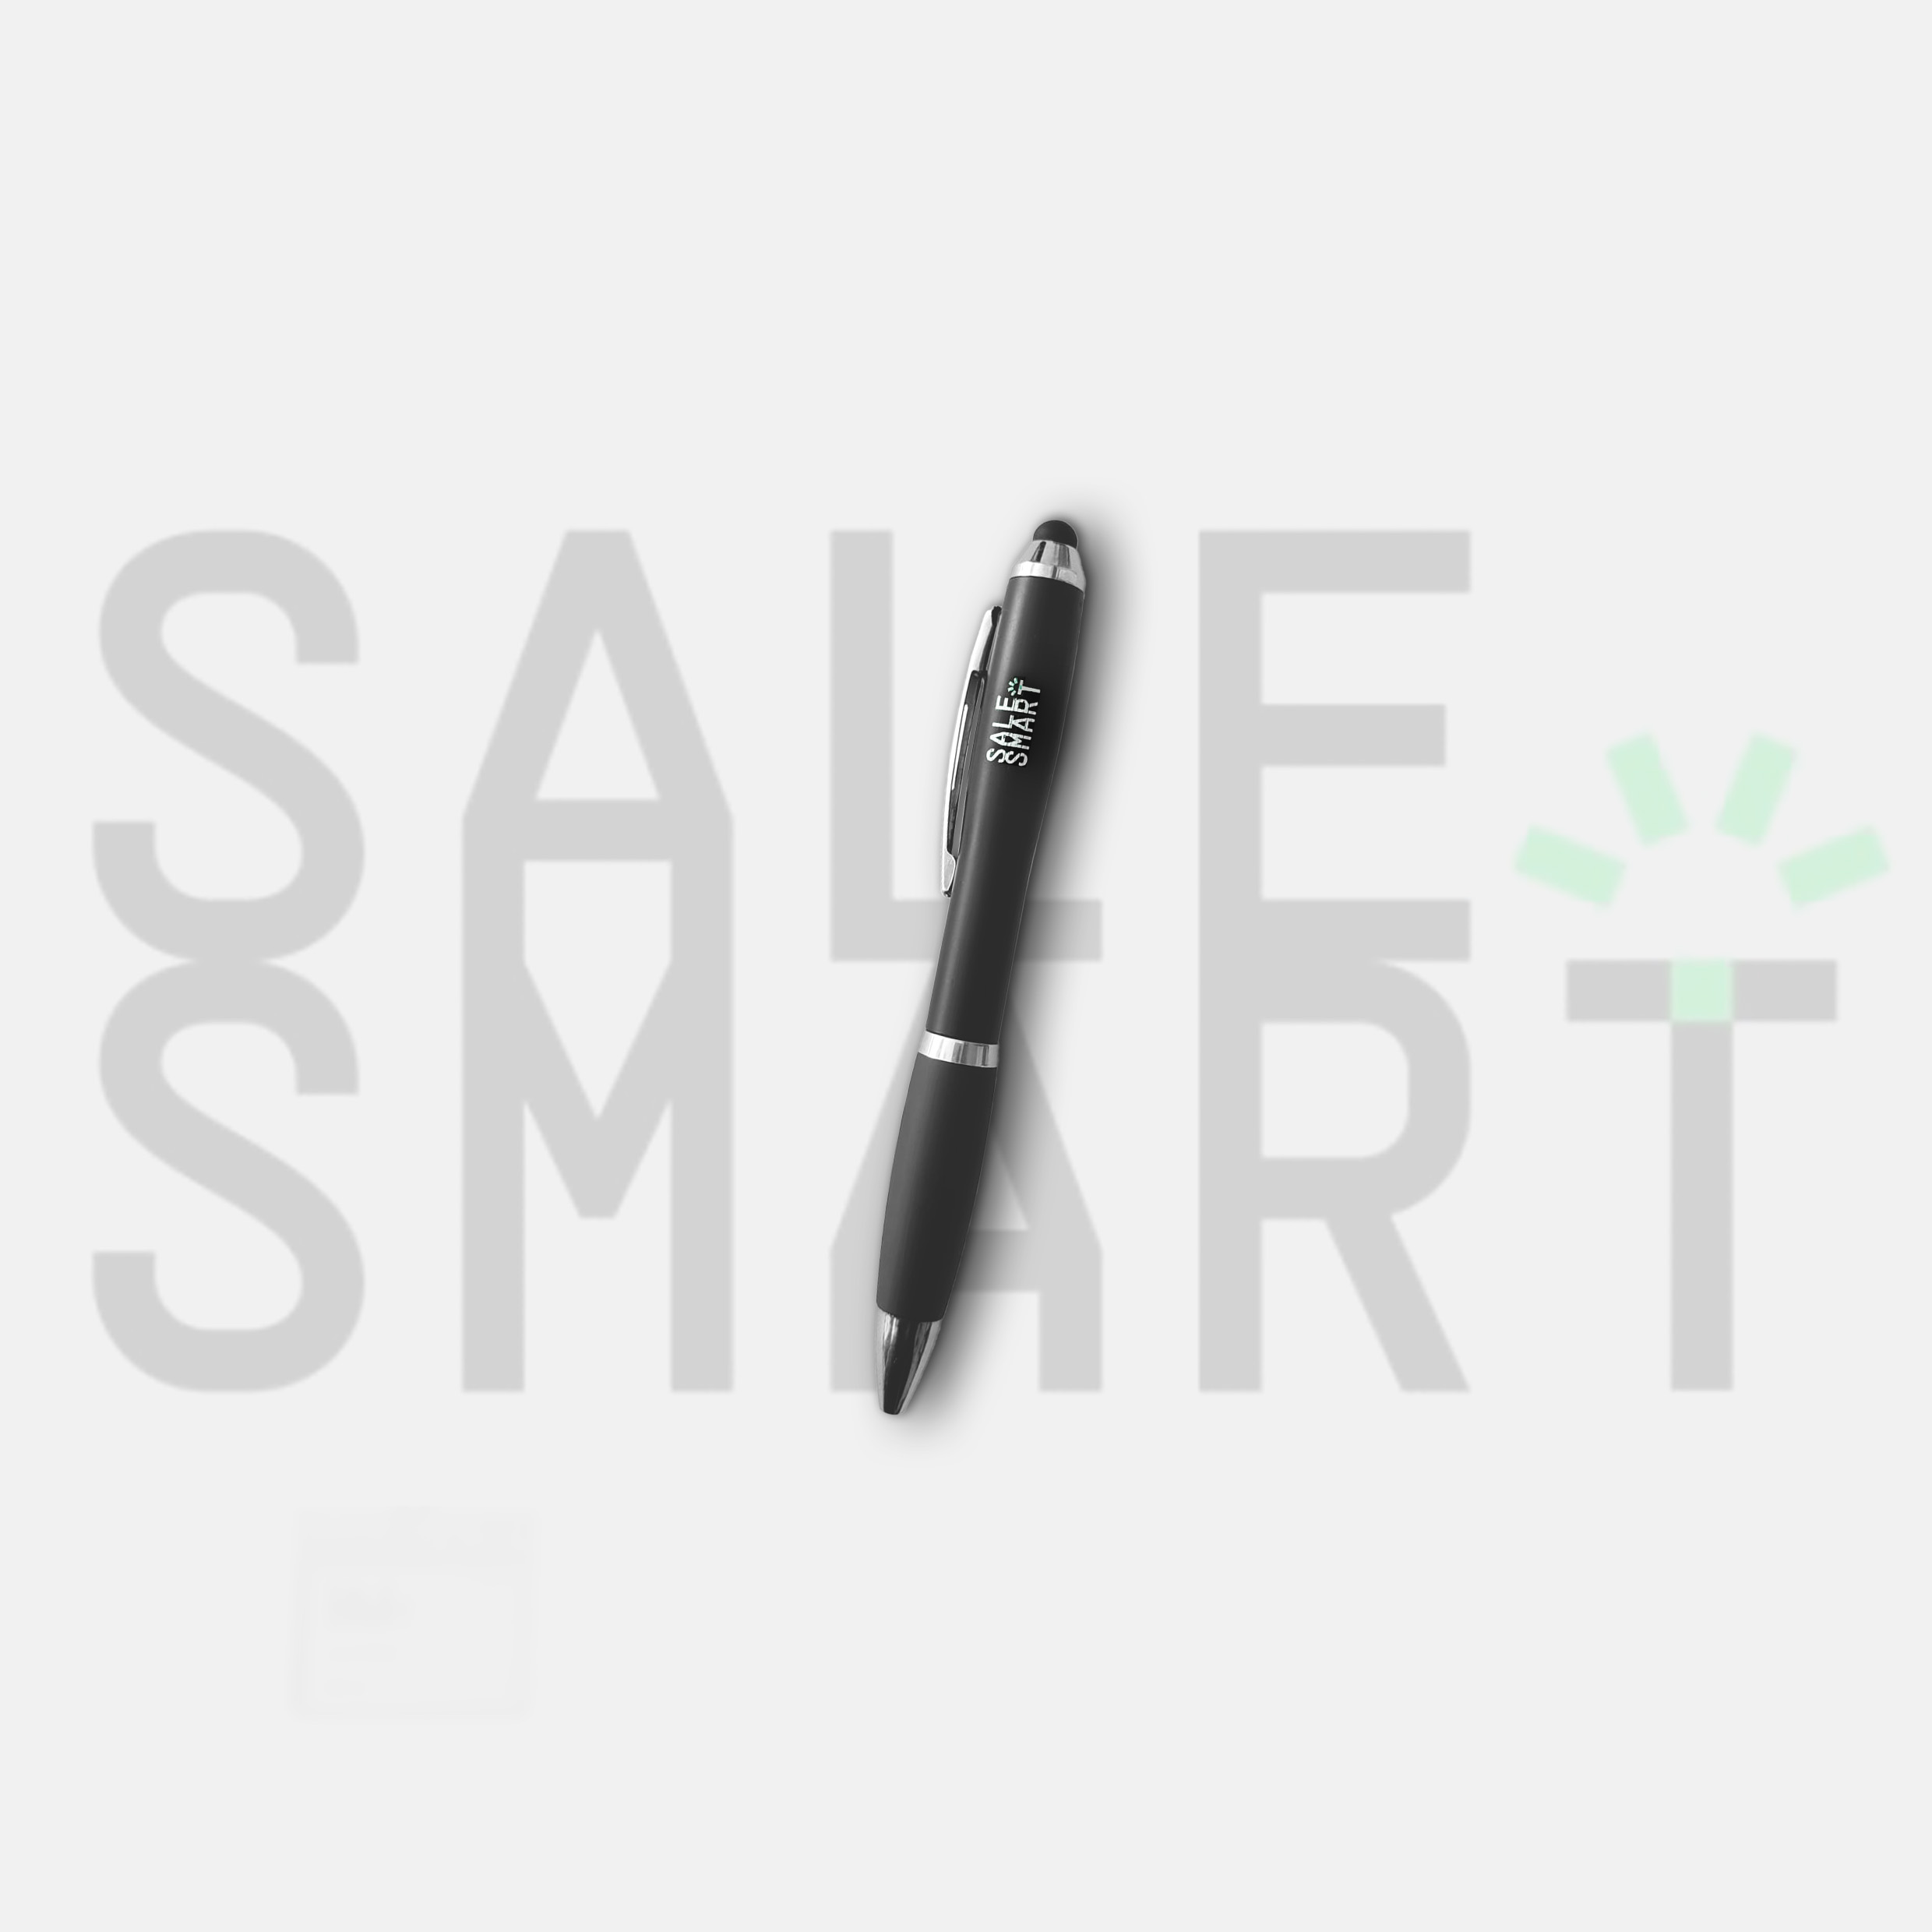 Penna con stampa logo SALESMART